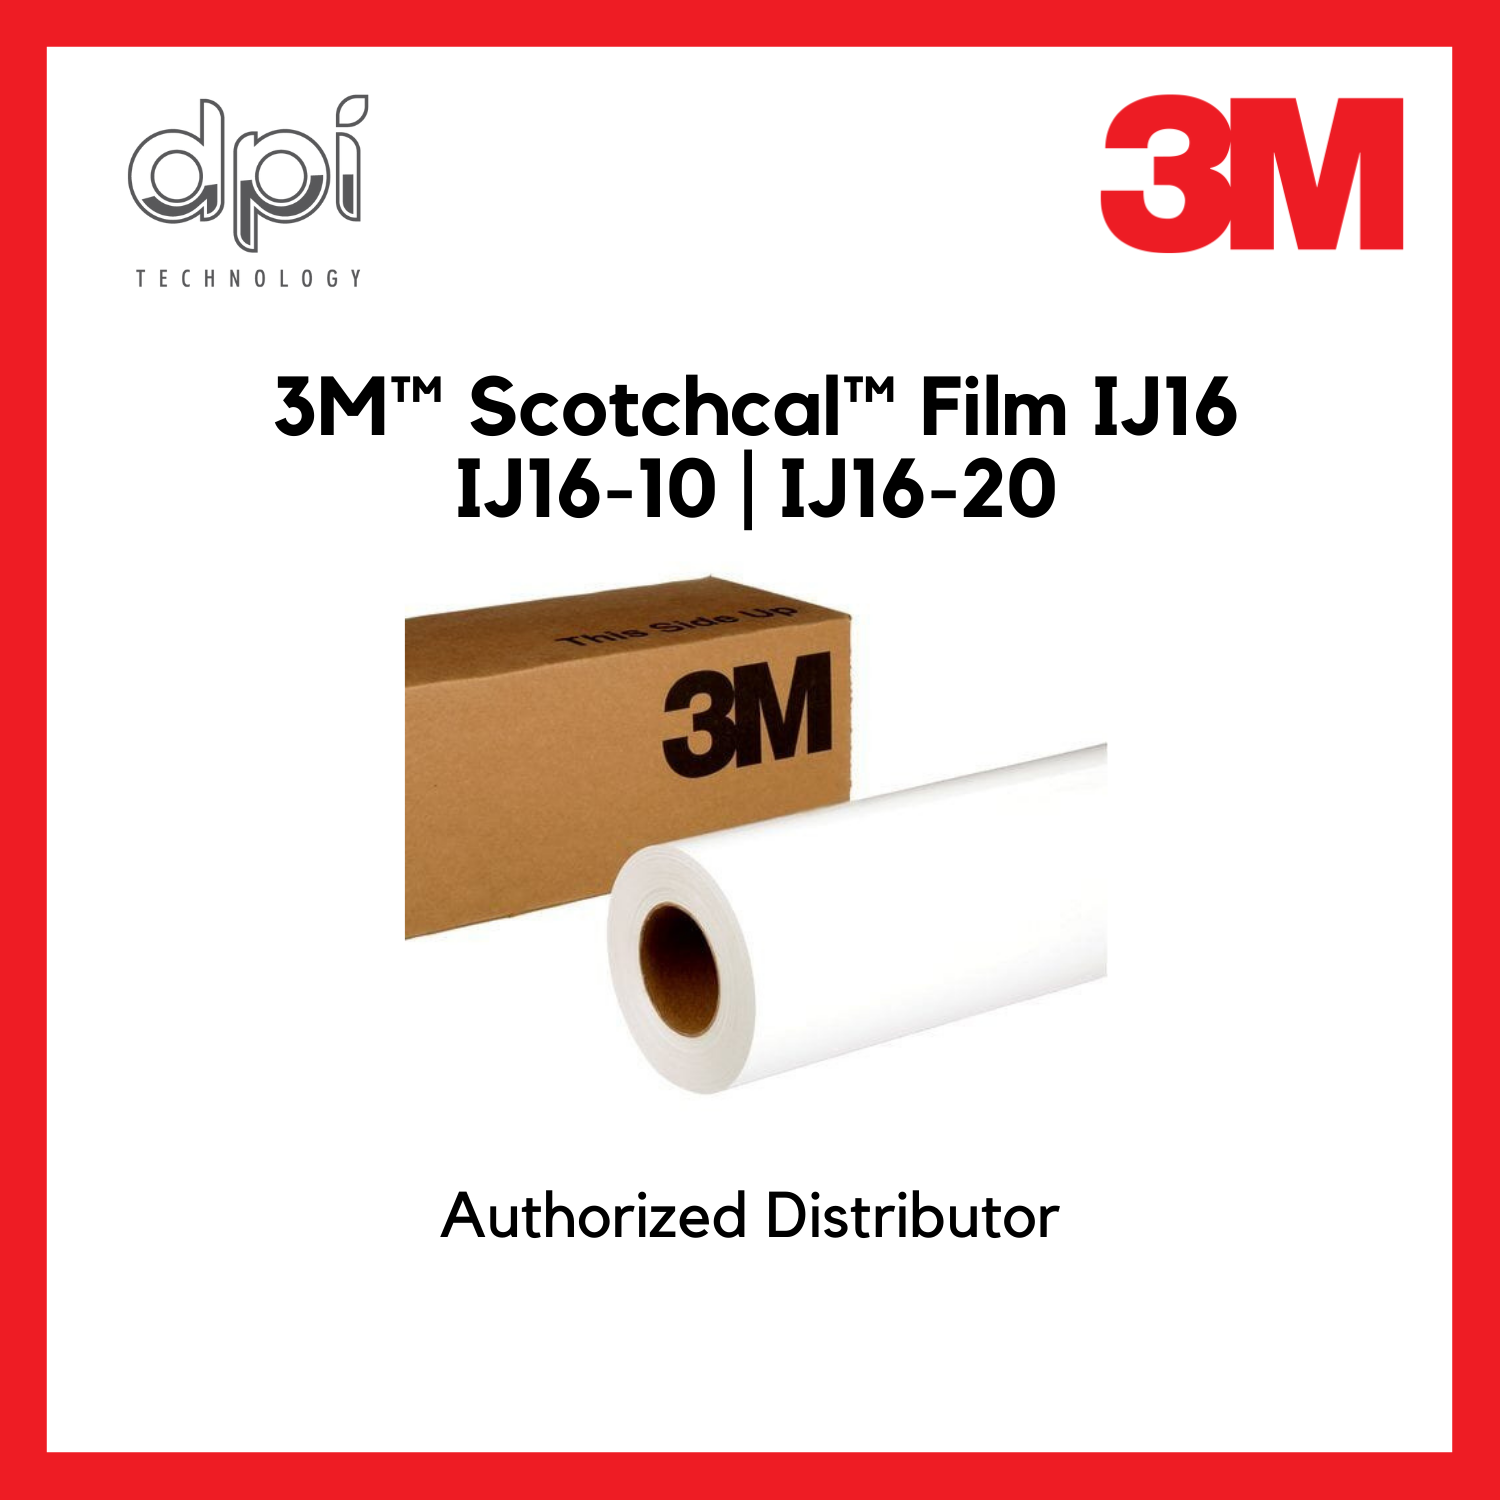 3M Scotchcal Film IJ16